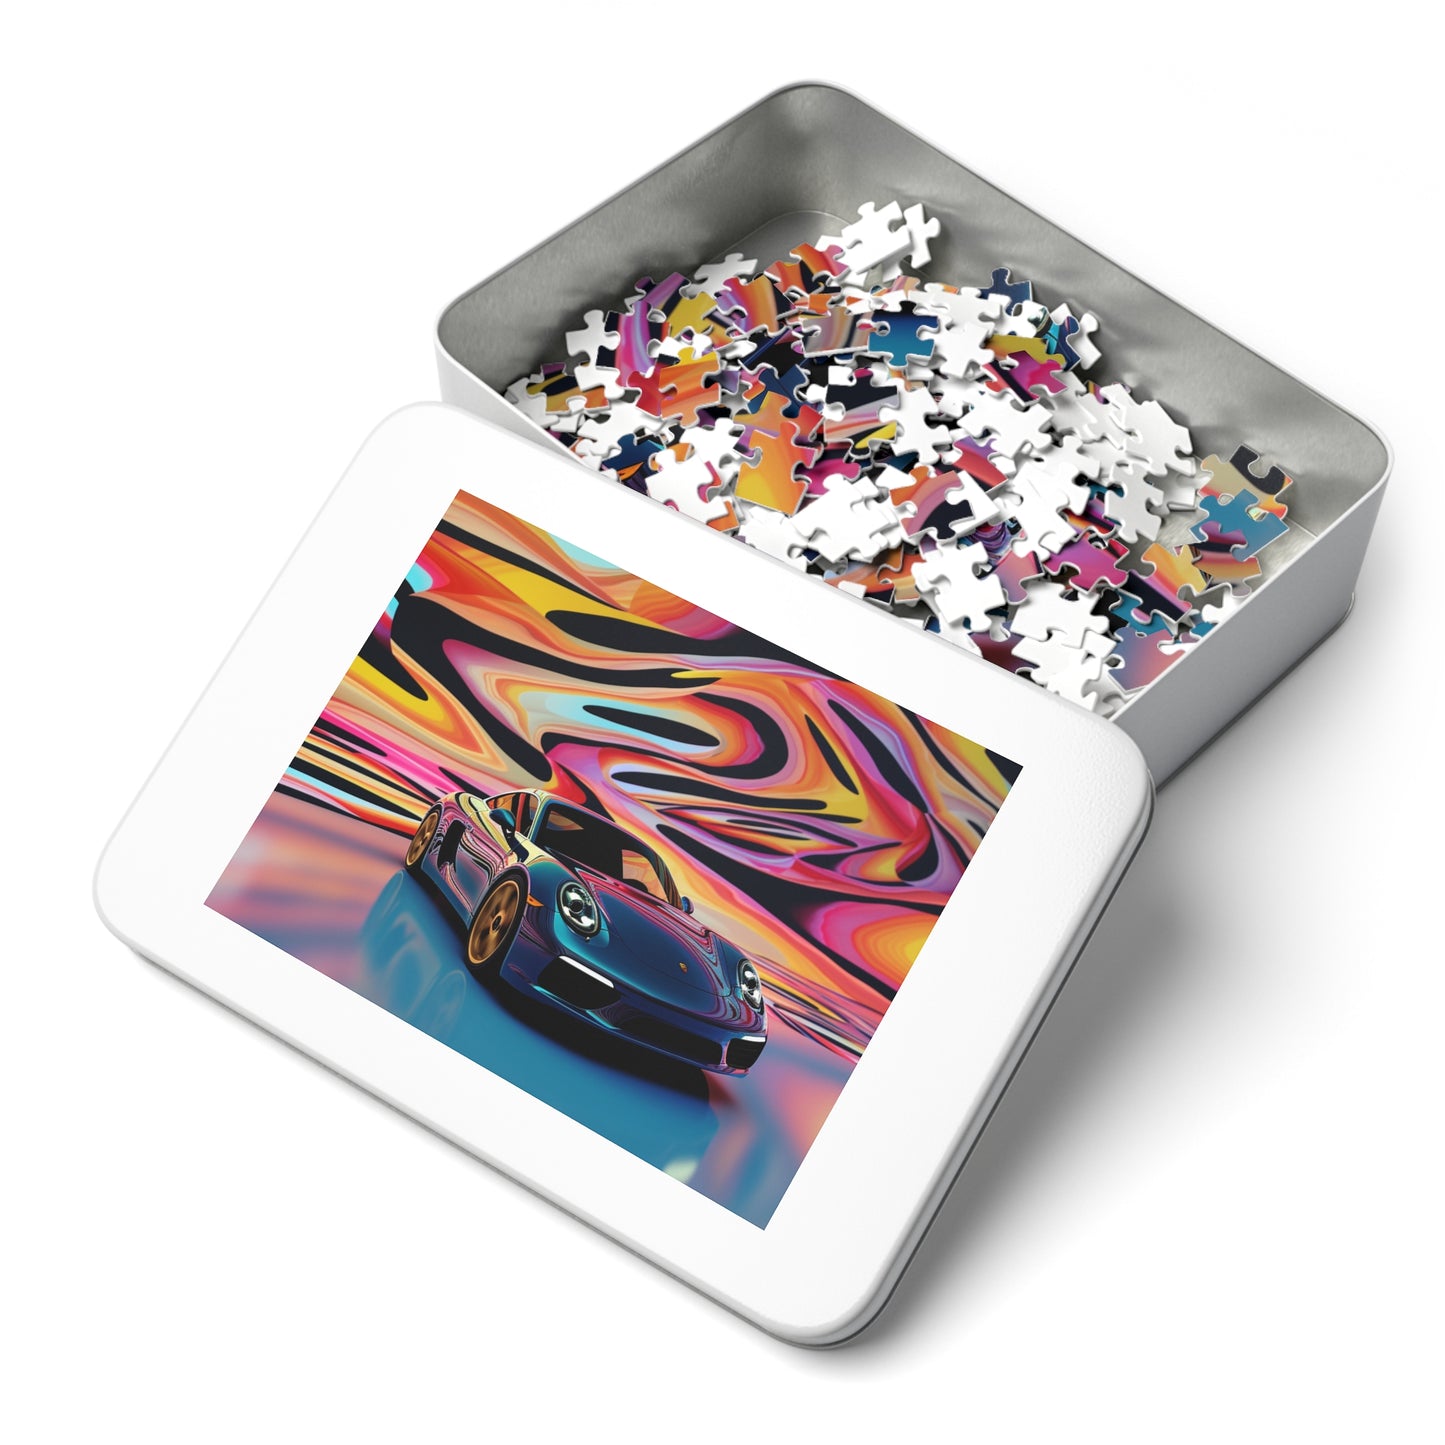 Jigsaw Puzzle (30, 110, 252, 500,1000-Piece) Porsche Water Fusion 2